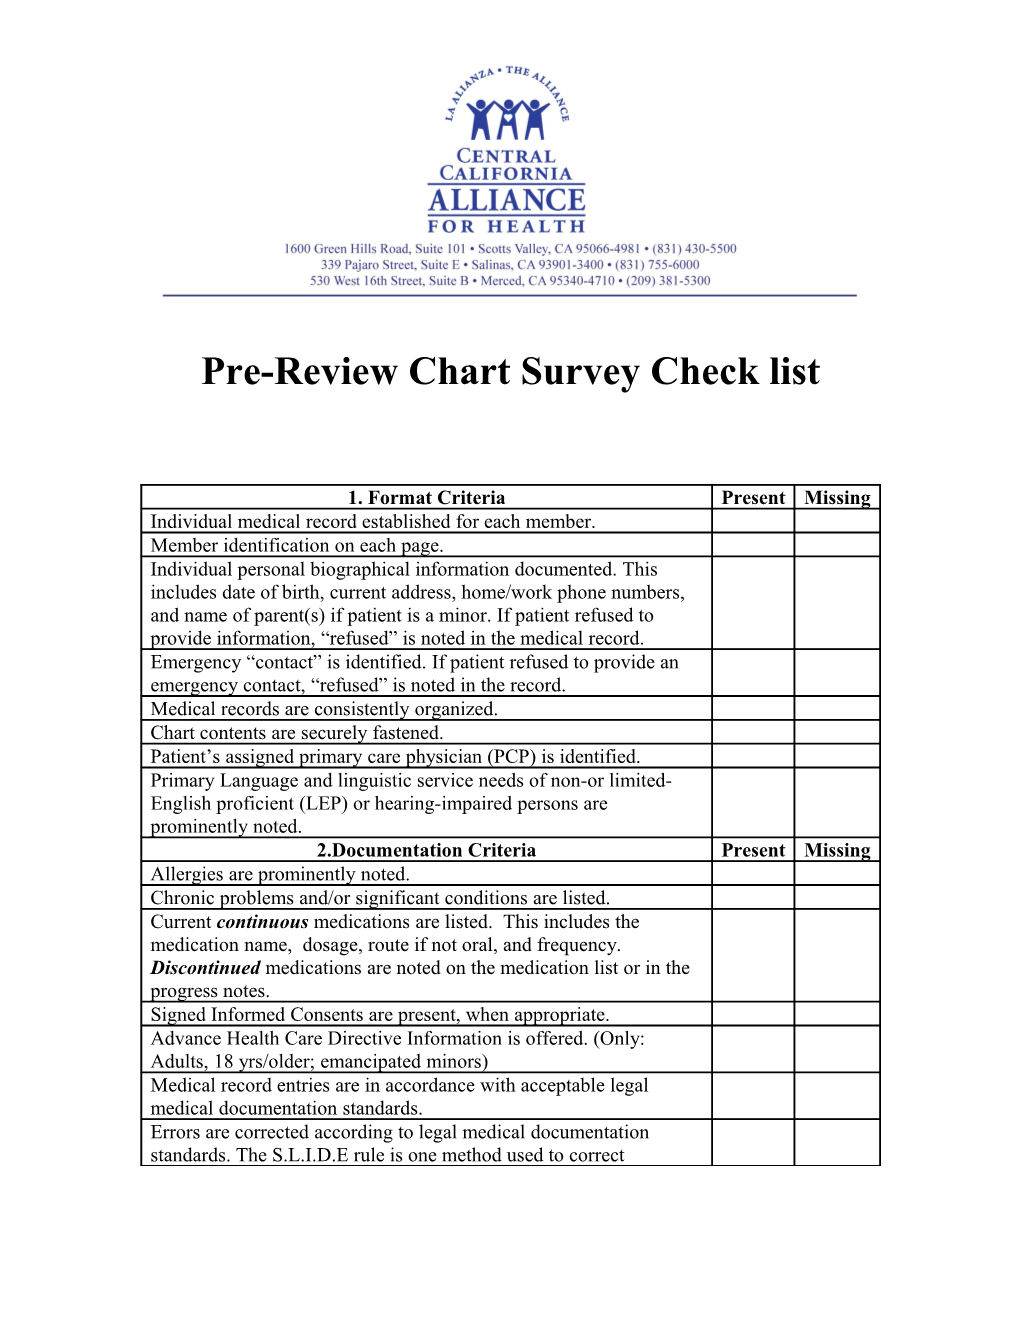 Pre-Review Chart Surveycheck List